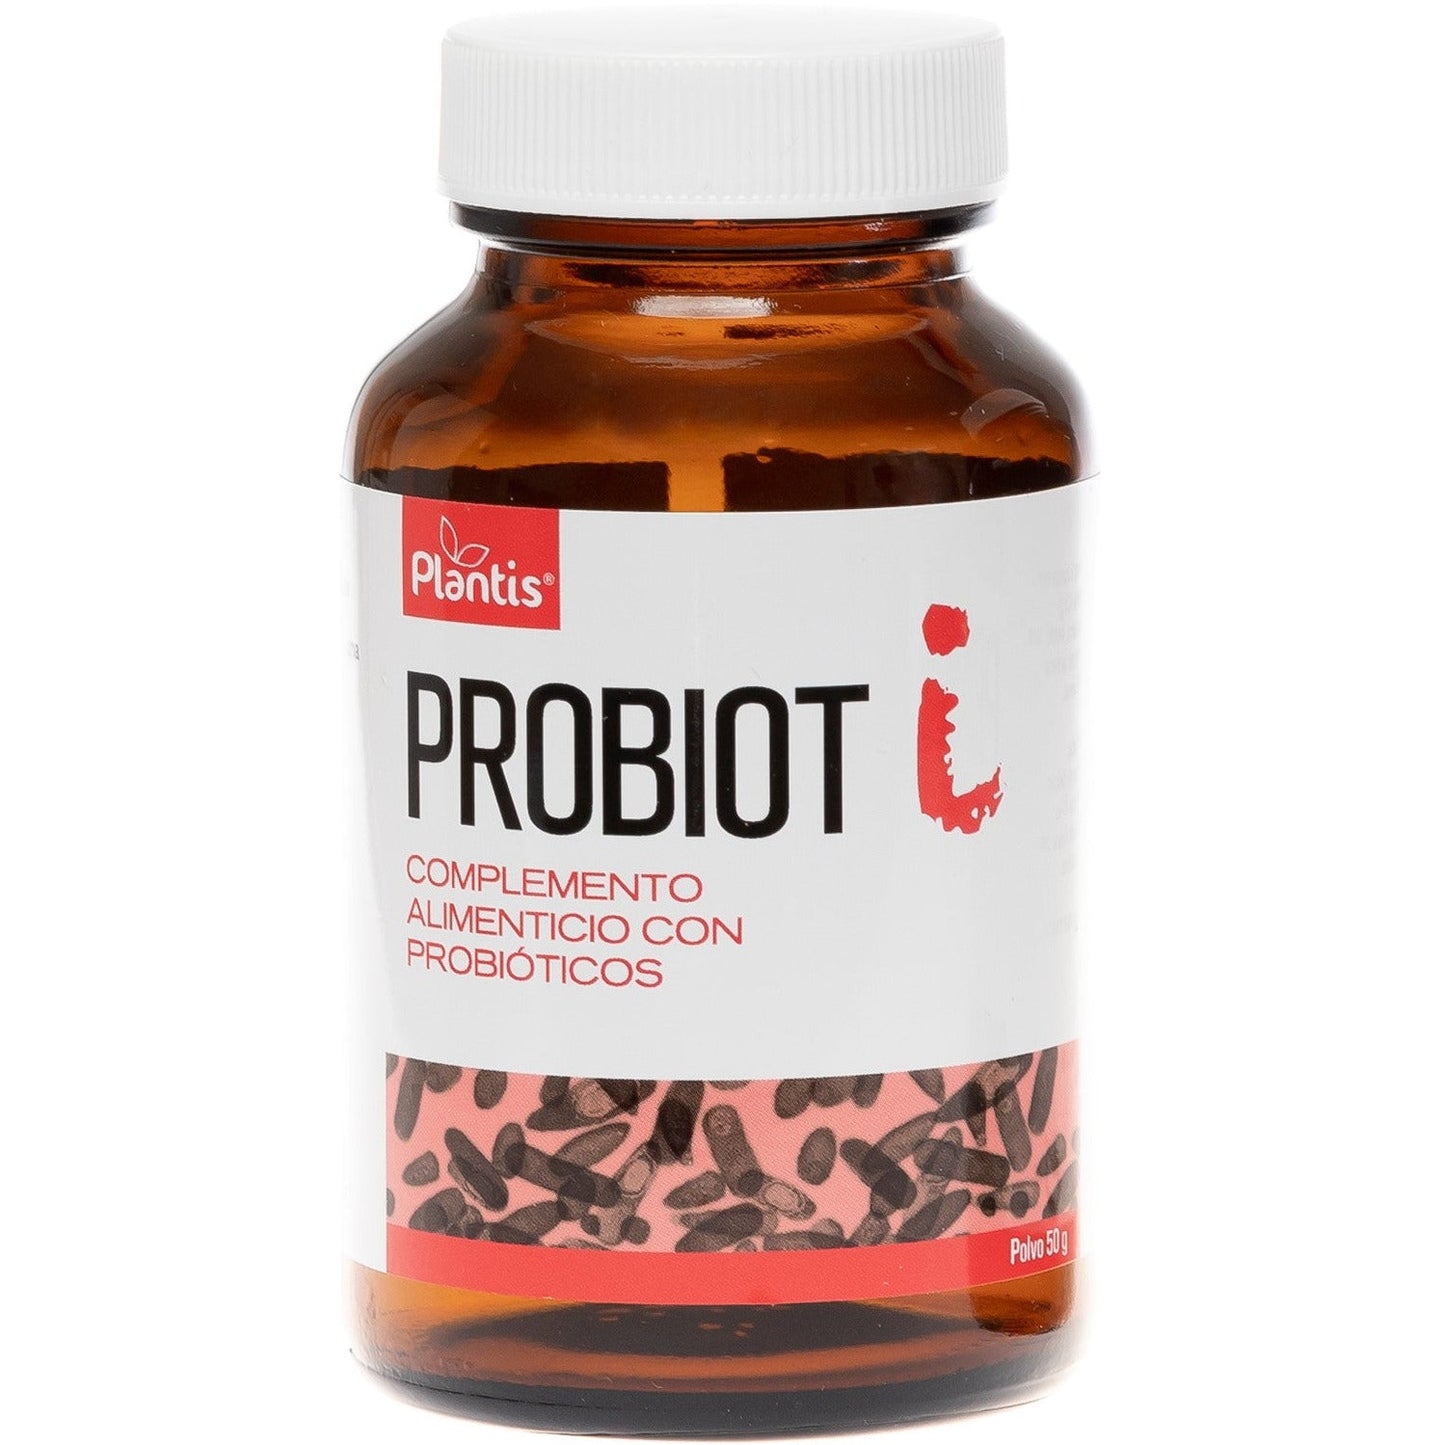 Probiot Infantil 50 gr | Plantis - Dietetica Ferrer